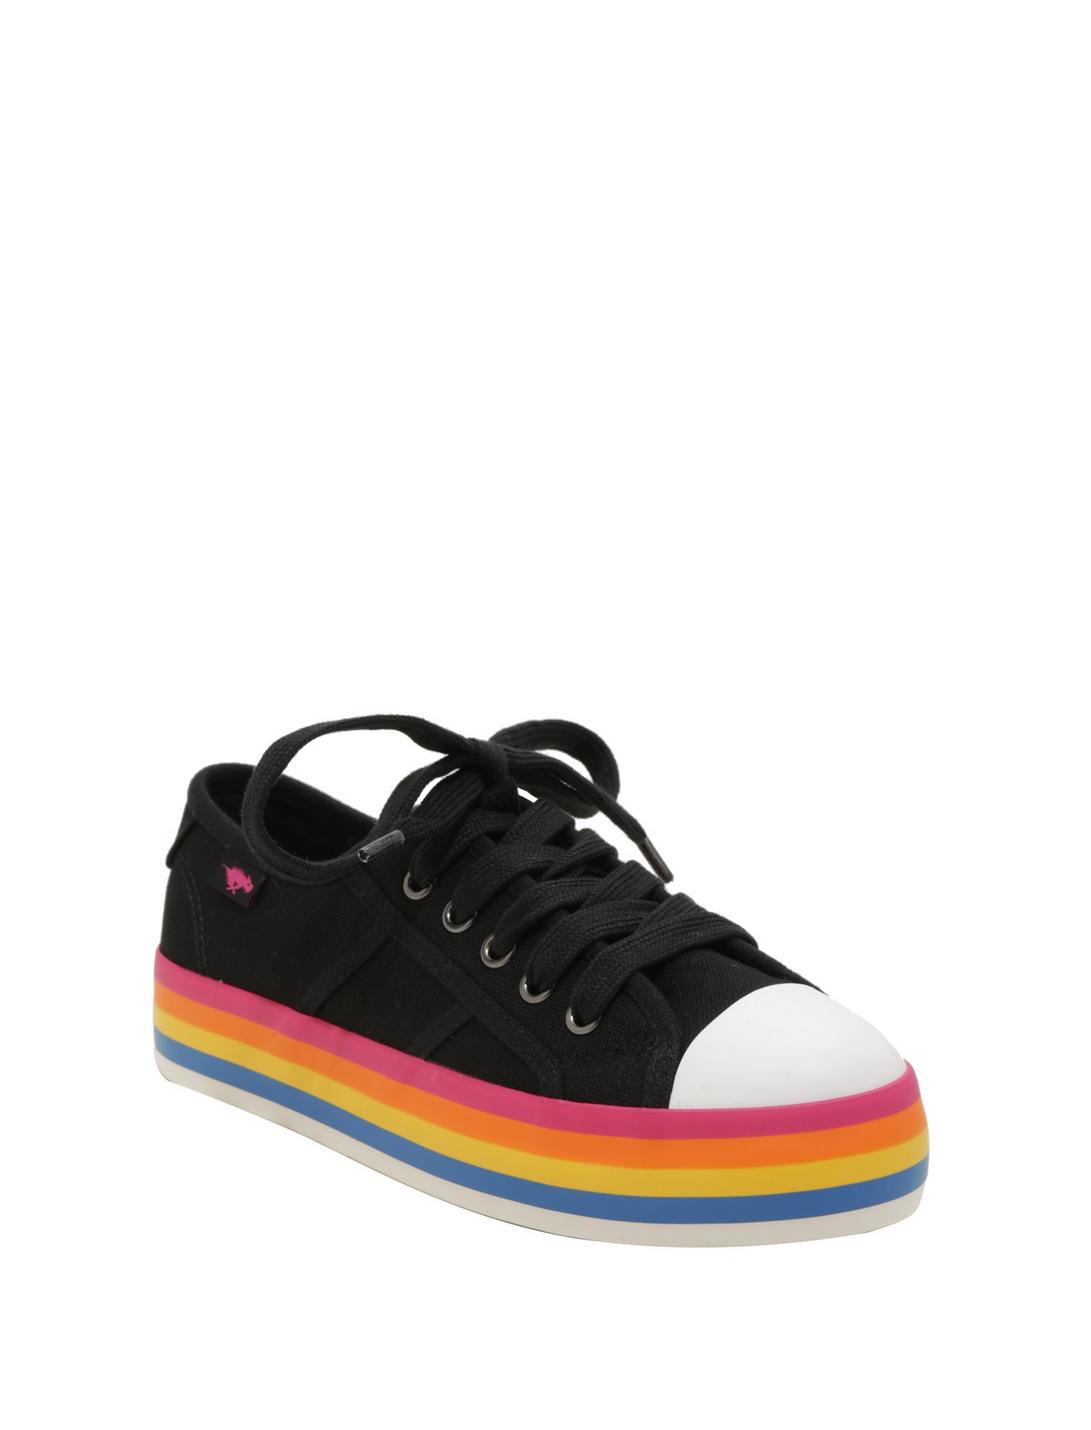 Rocket Dog Rainbow Sole Canvas Sneakers, MULTI, hi-res